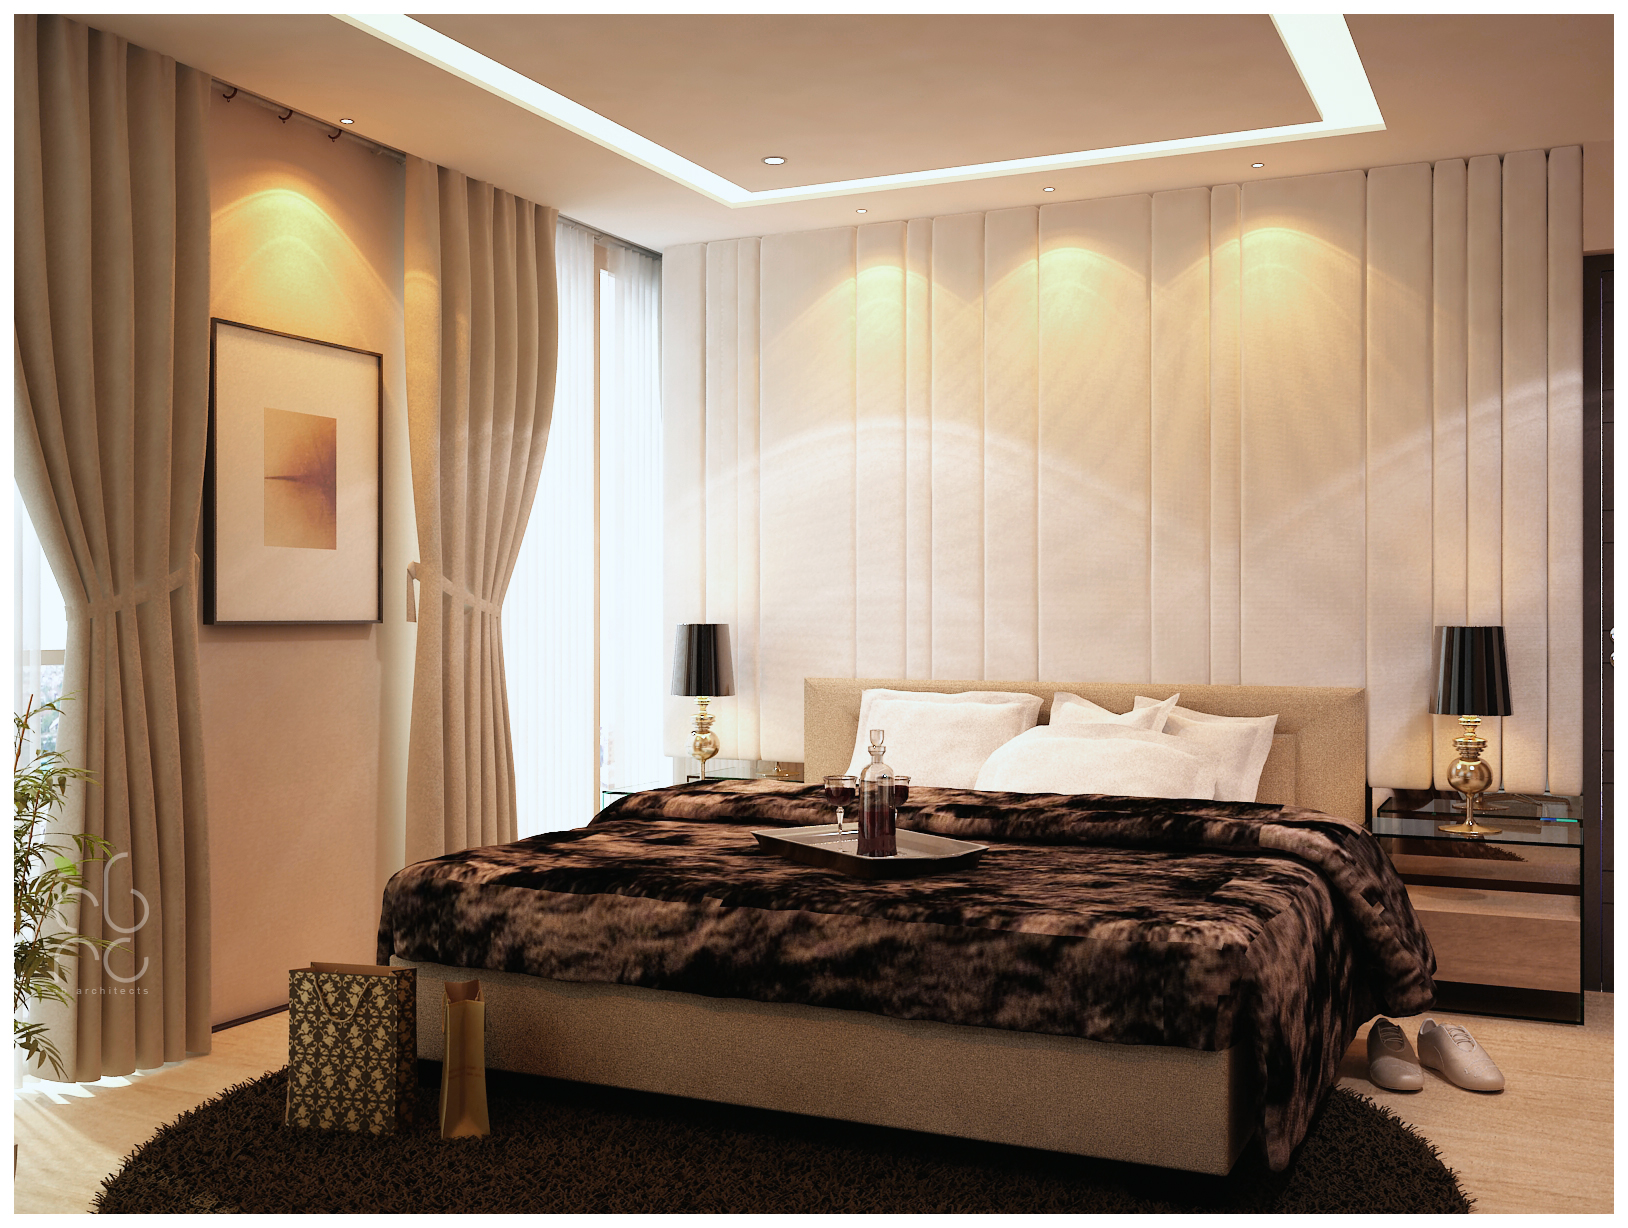 kamar tidur utama_2 by okamiammaterasu on DeviantArt